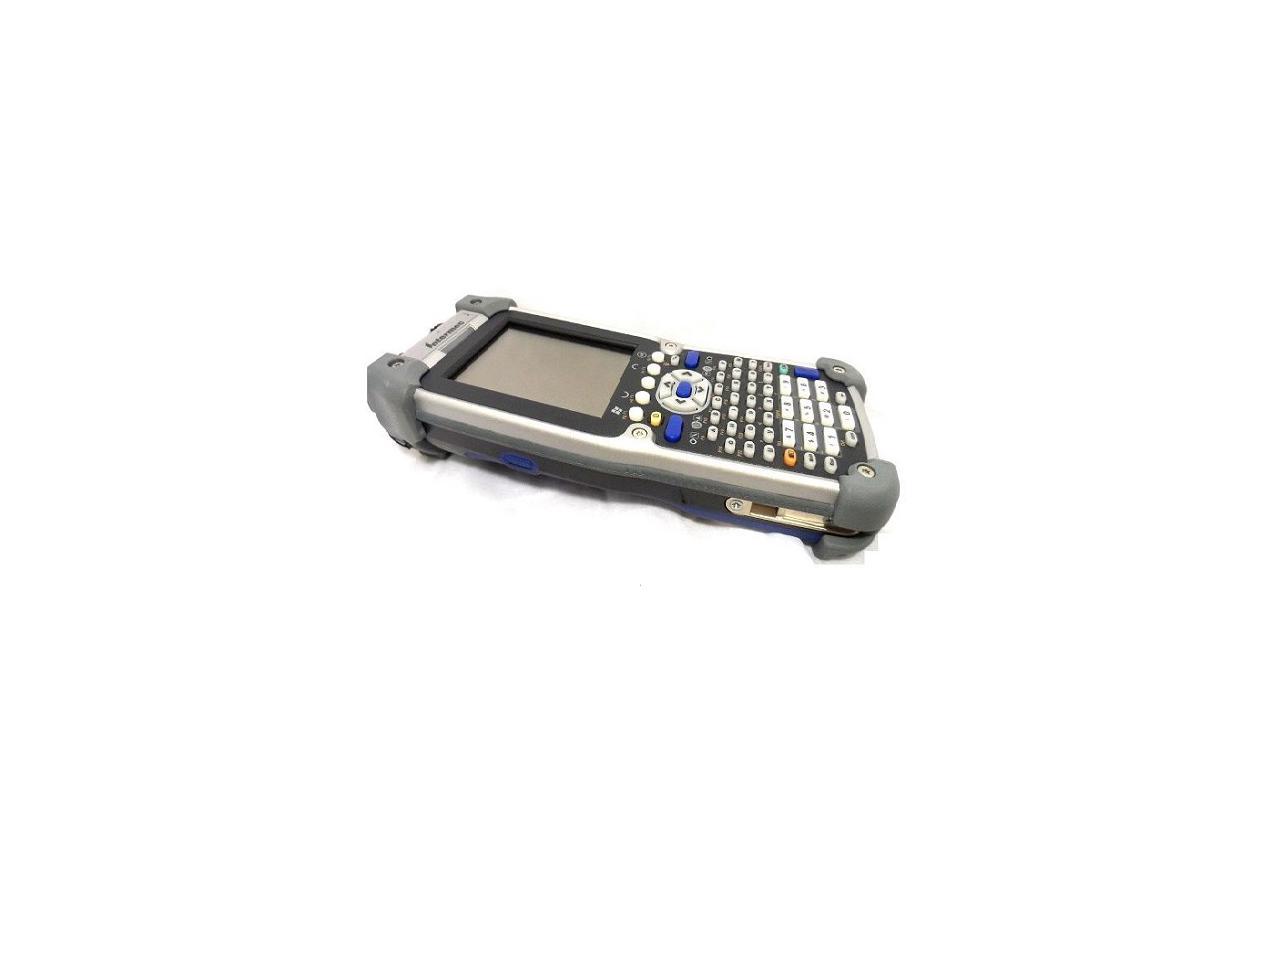 Intermec CK61NI Handheld Computer Barcode Scanner